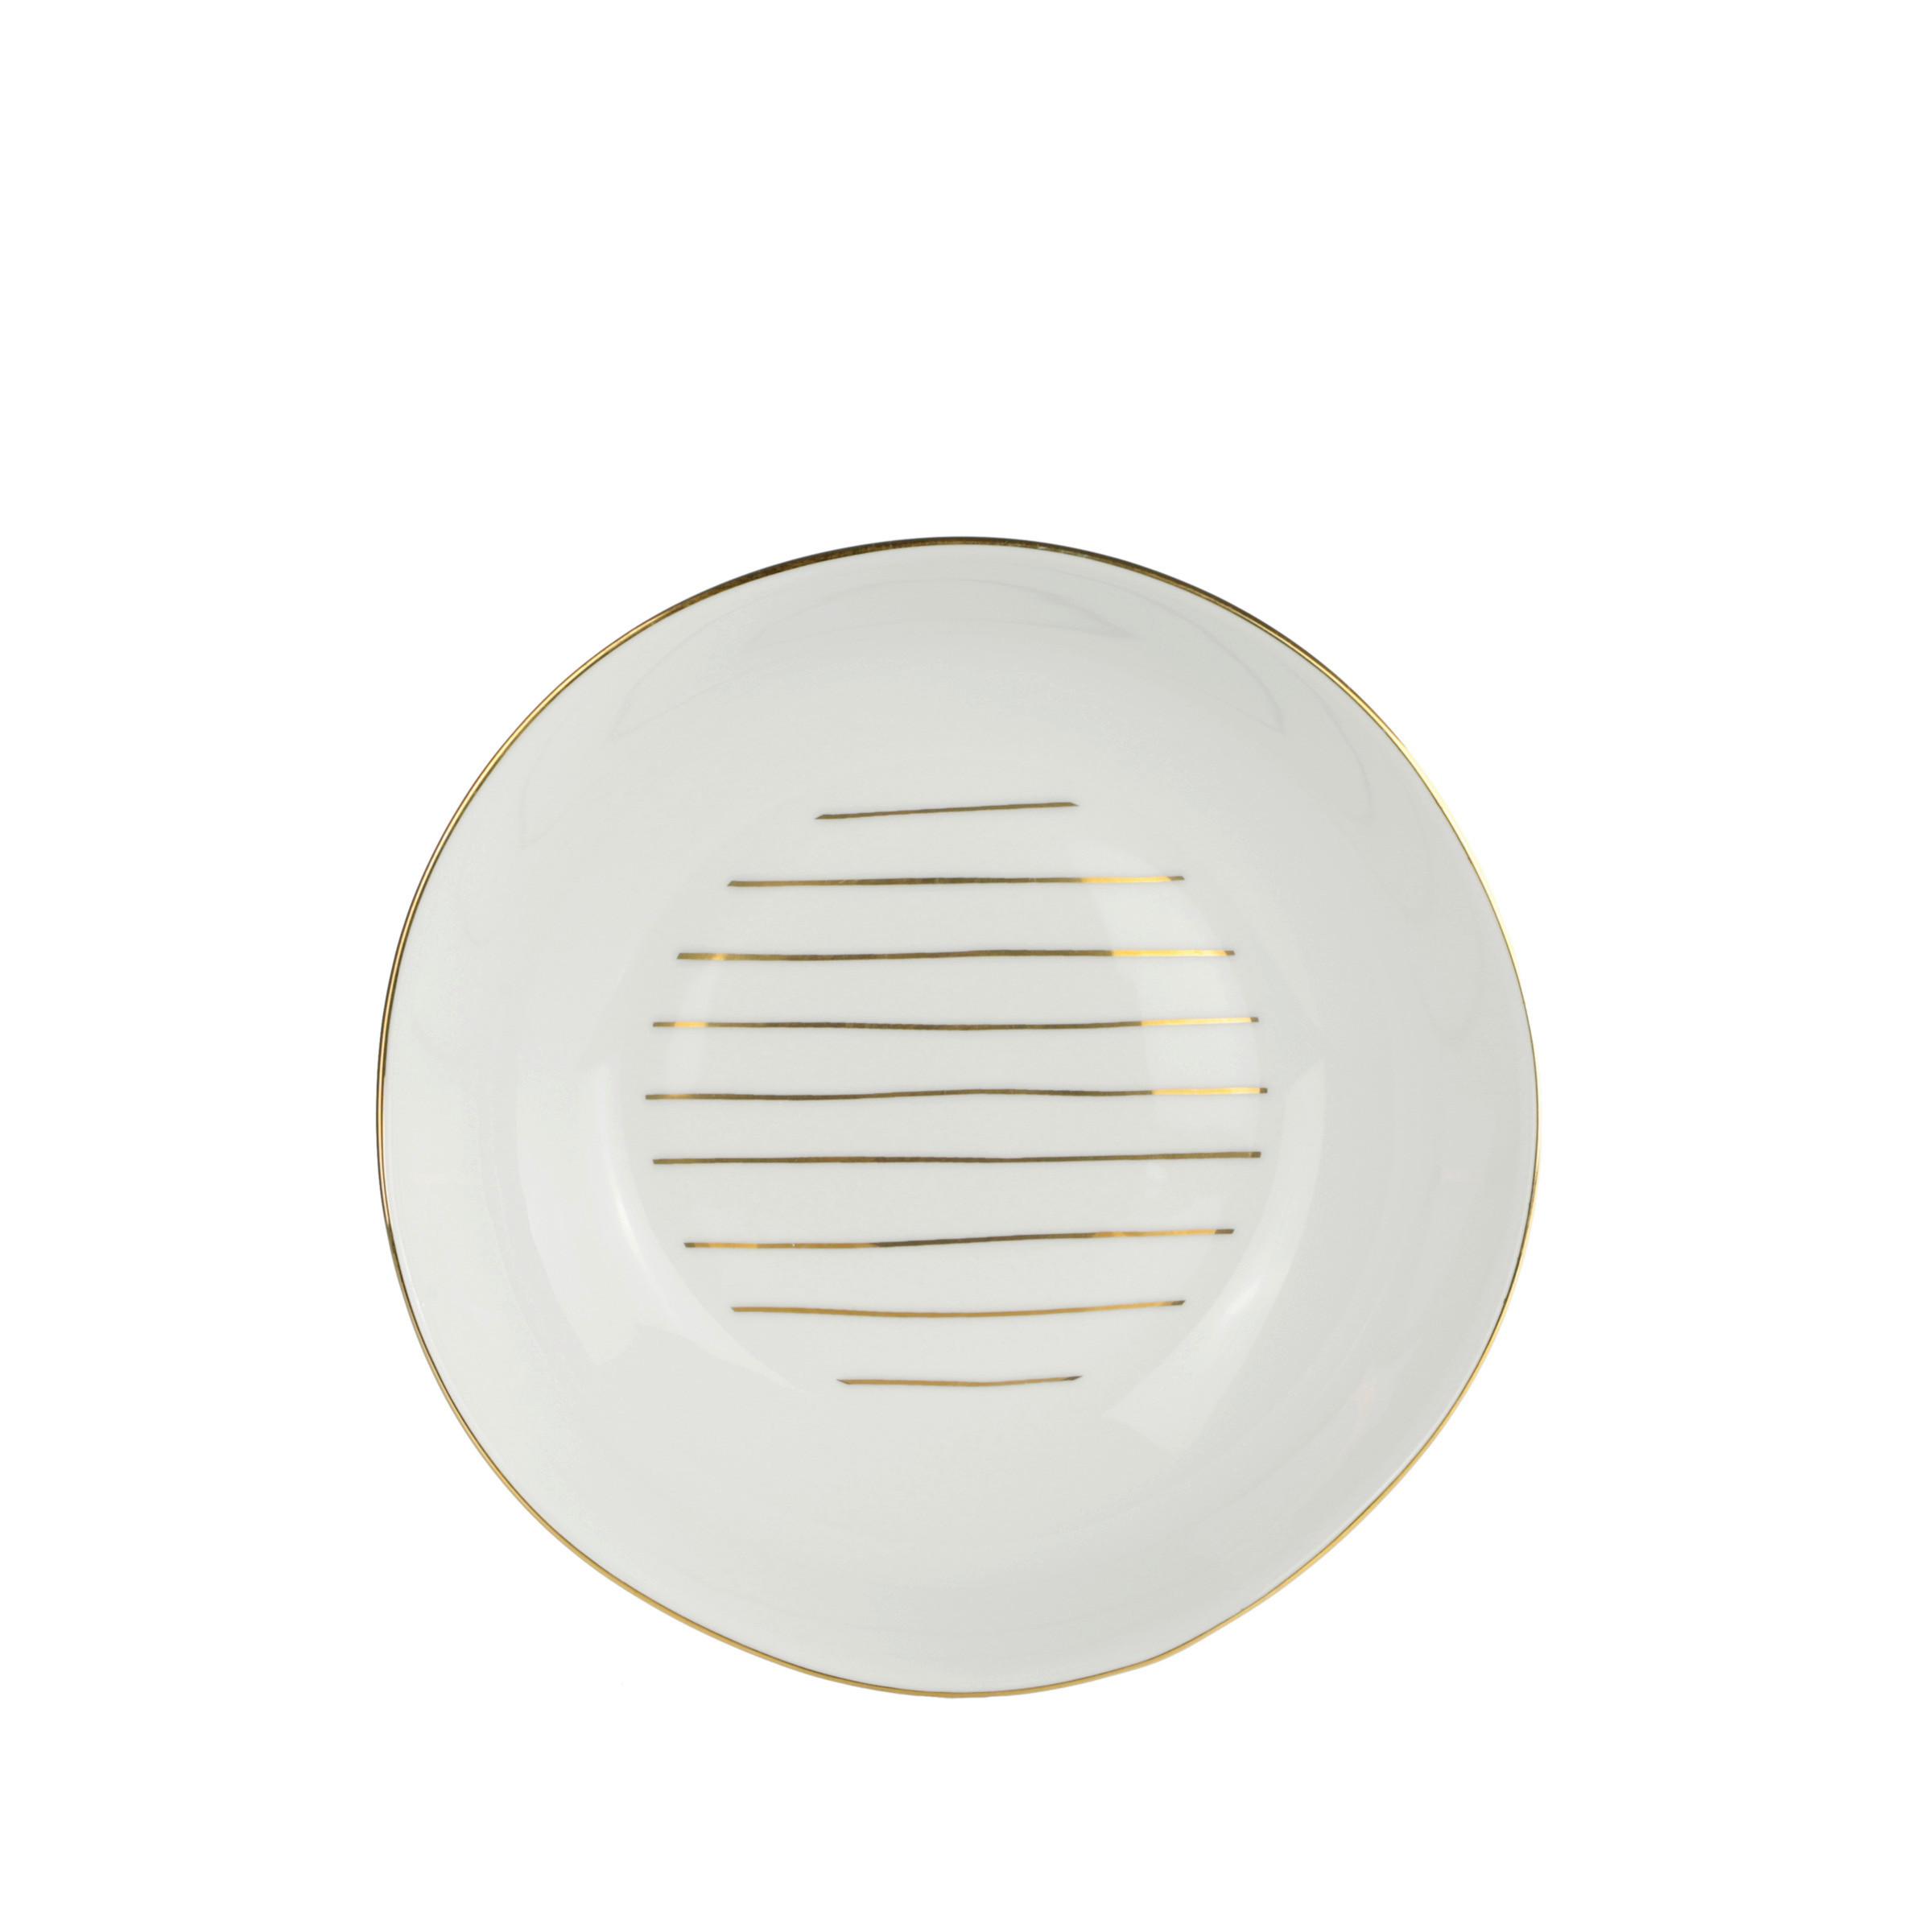 Hluboký Talíř Onix - bílá/barvy zlata, Moderní, keramika (20,5cm) - Premium Living